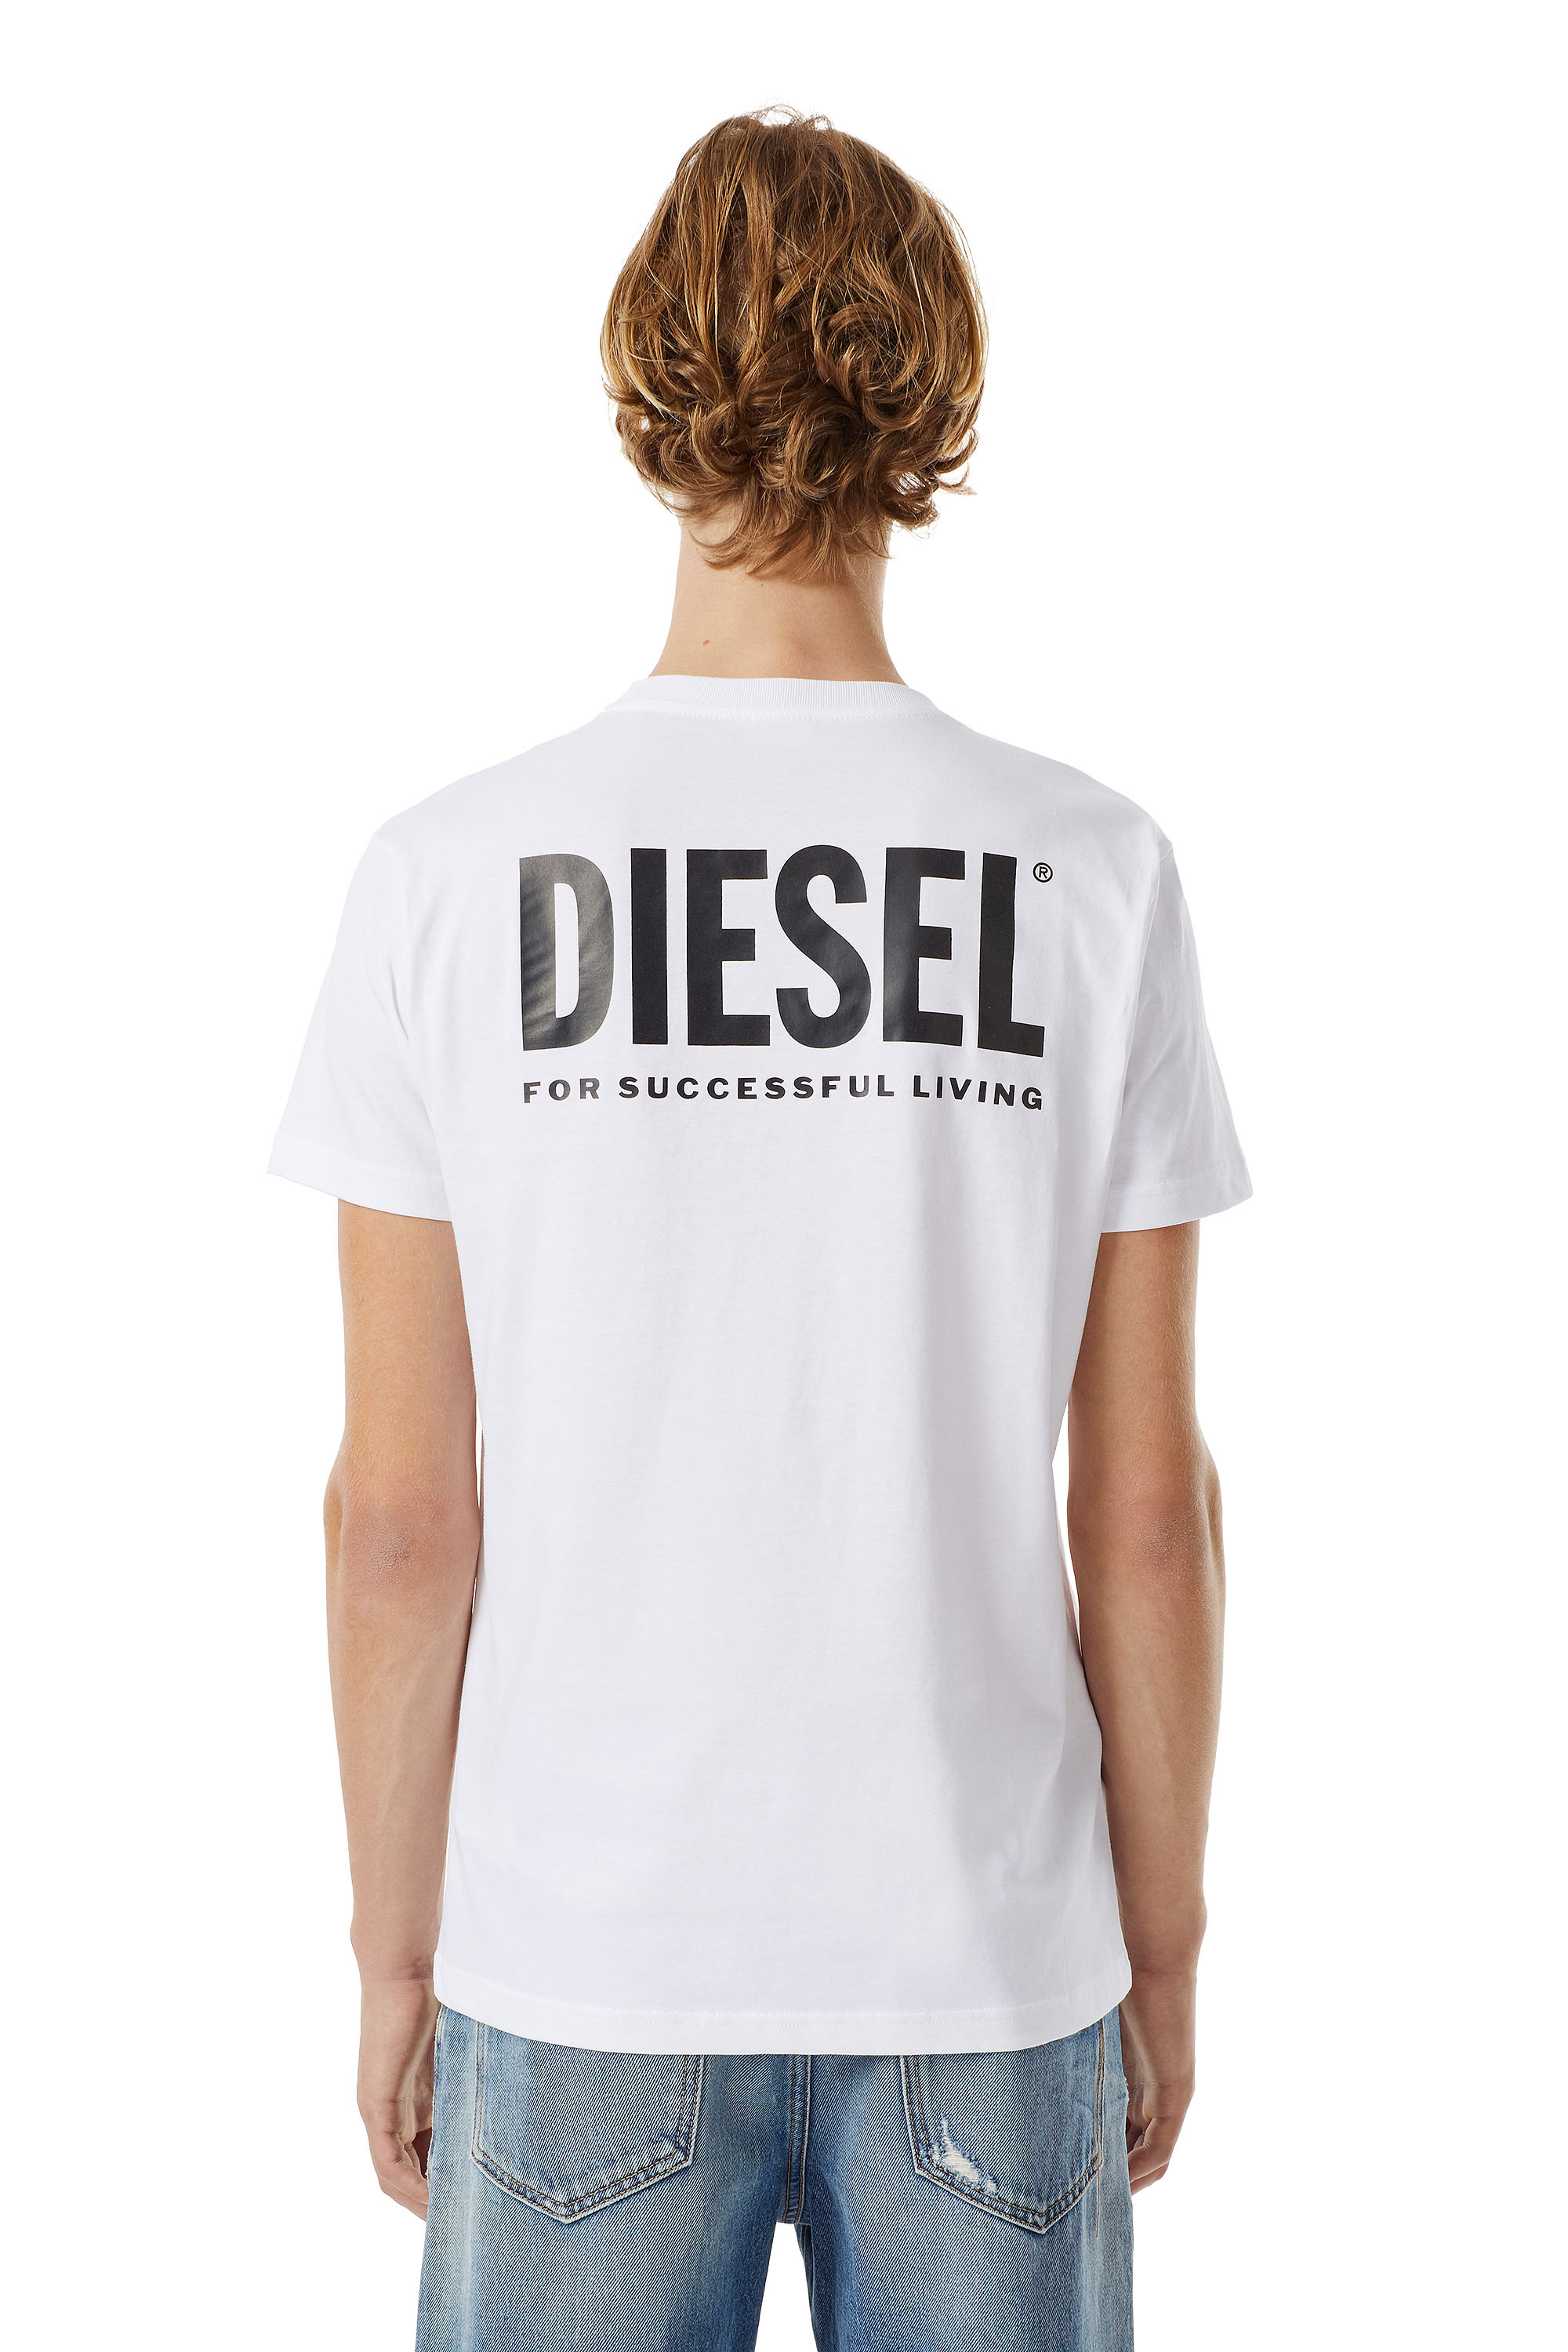 Diesel - LR-T-DIEGO-VIC, White - Image 2